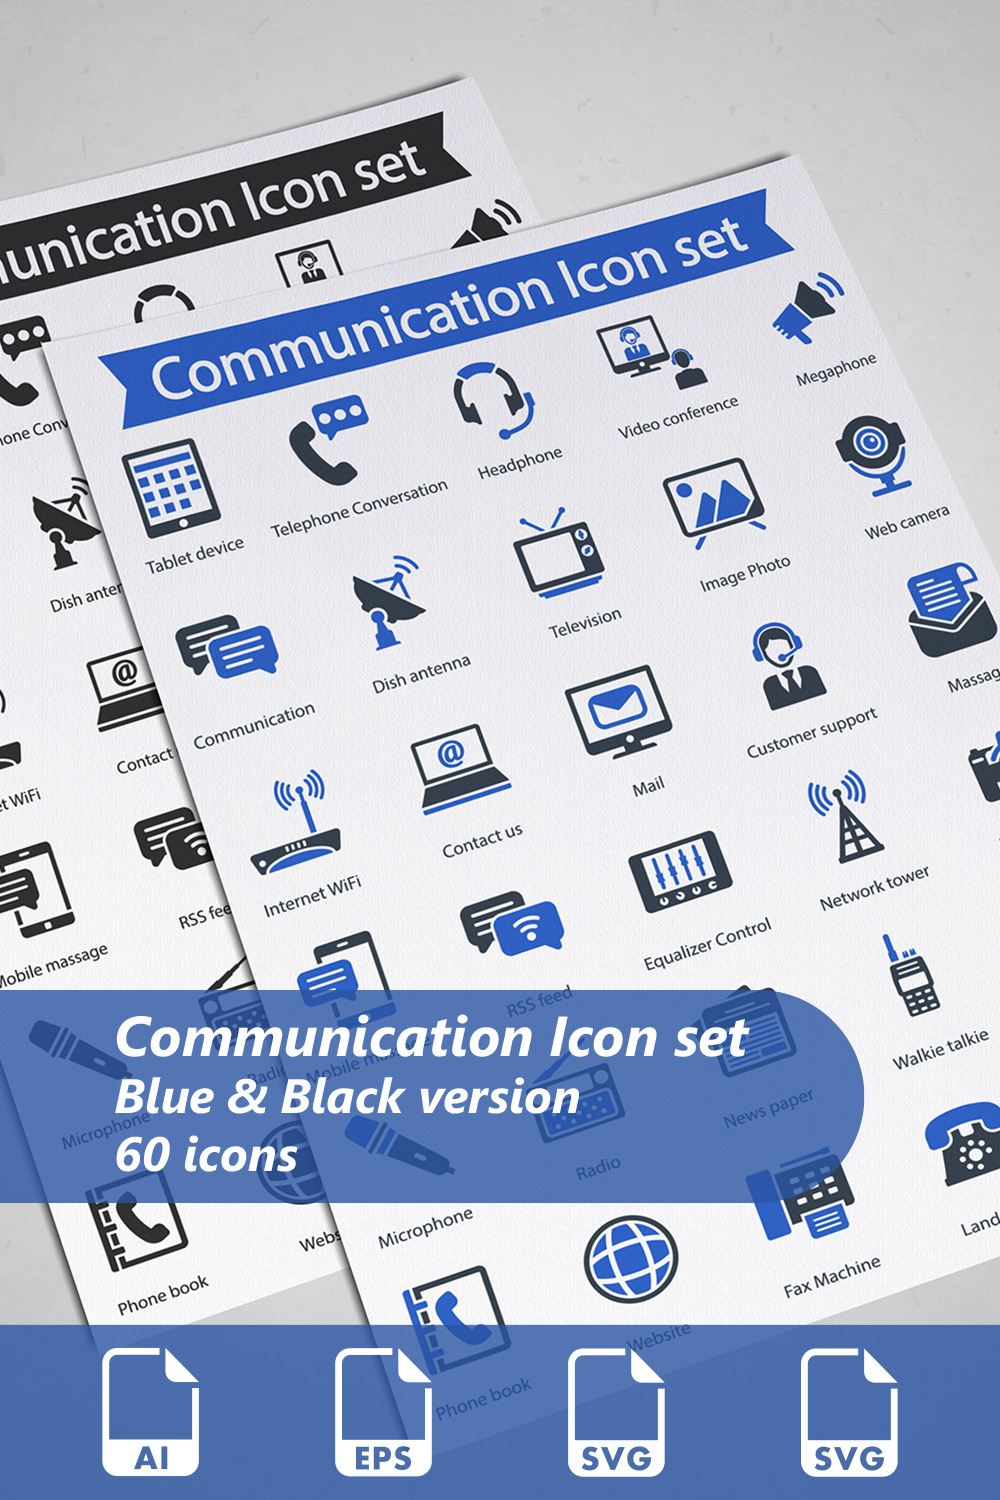 Communication Icon Set pinterest preview image.